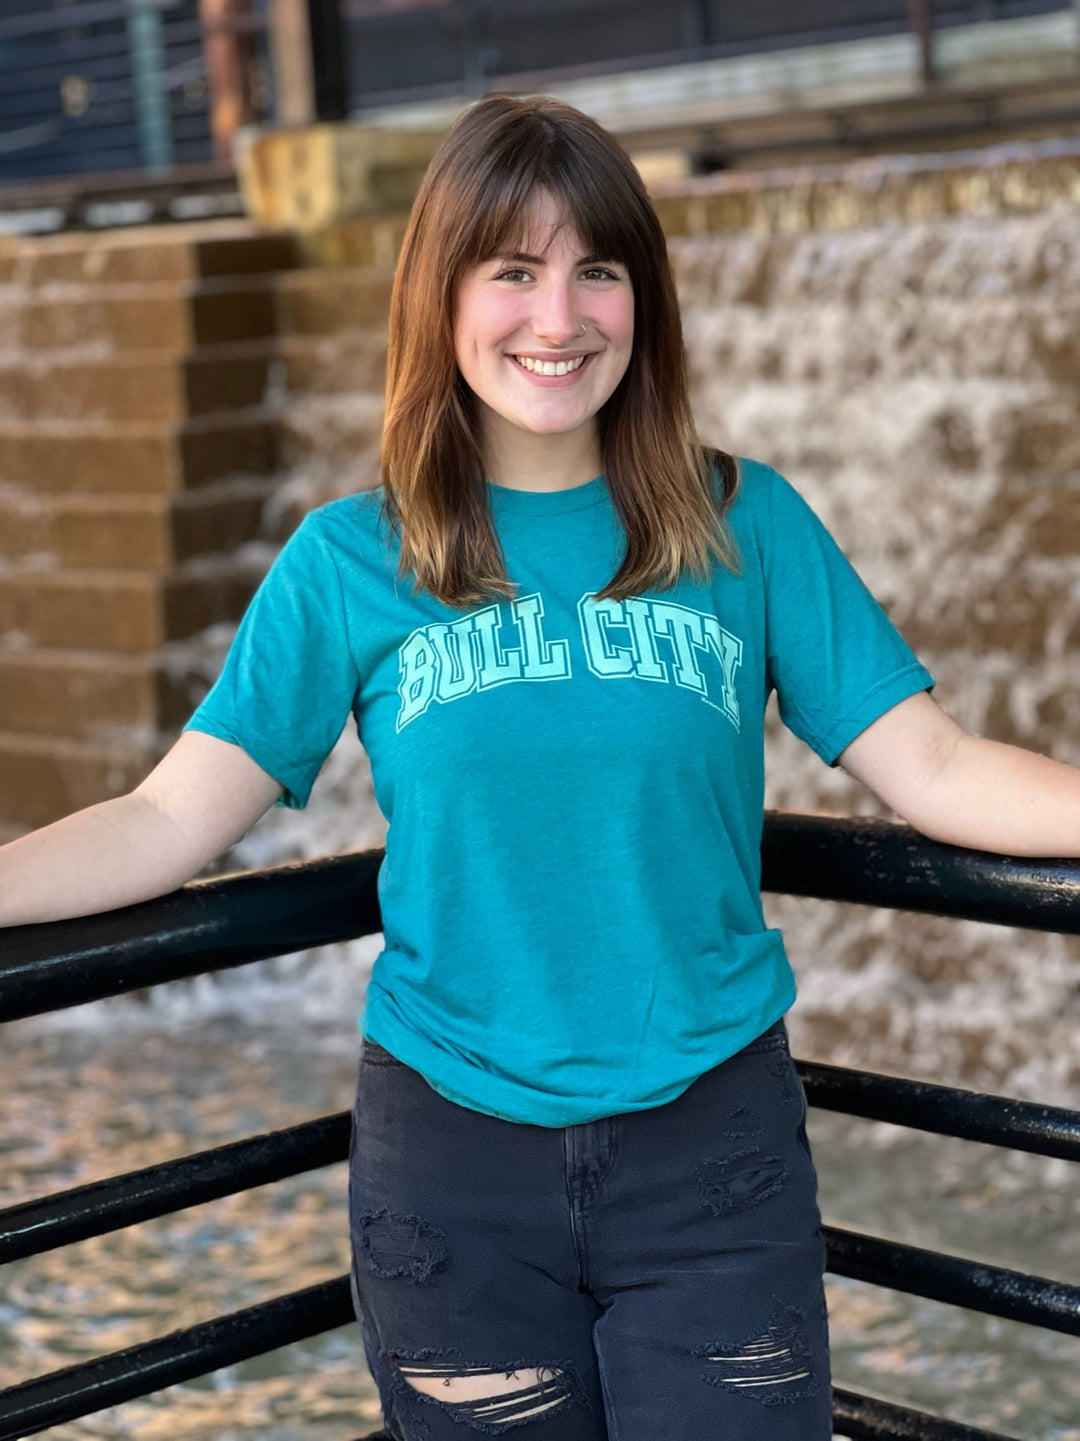 Bull City T-Shirt #2